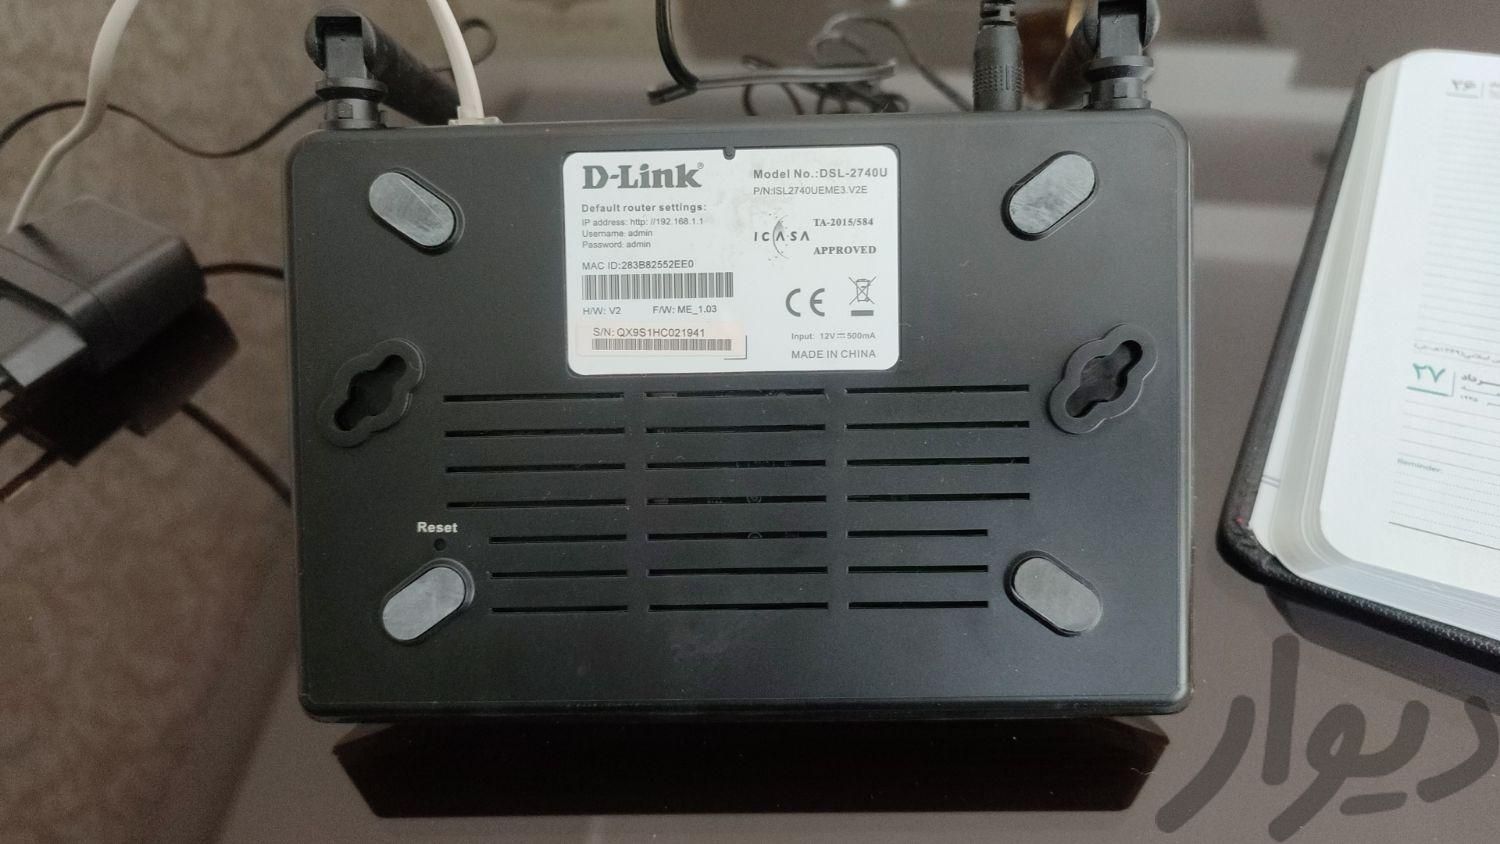 مودم D-LINk مدل DSL-2740u|مودم و تجهیزات شبکه رایانه|تهران, توحید|دیوار